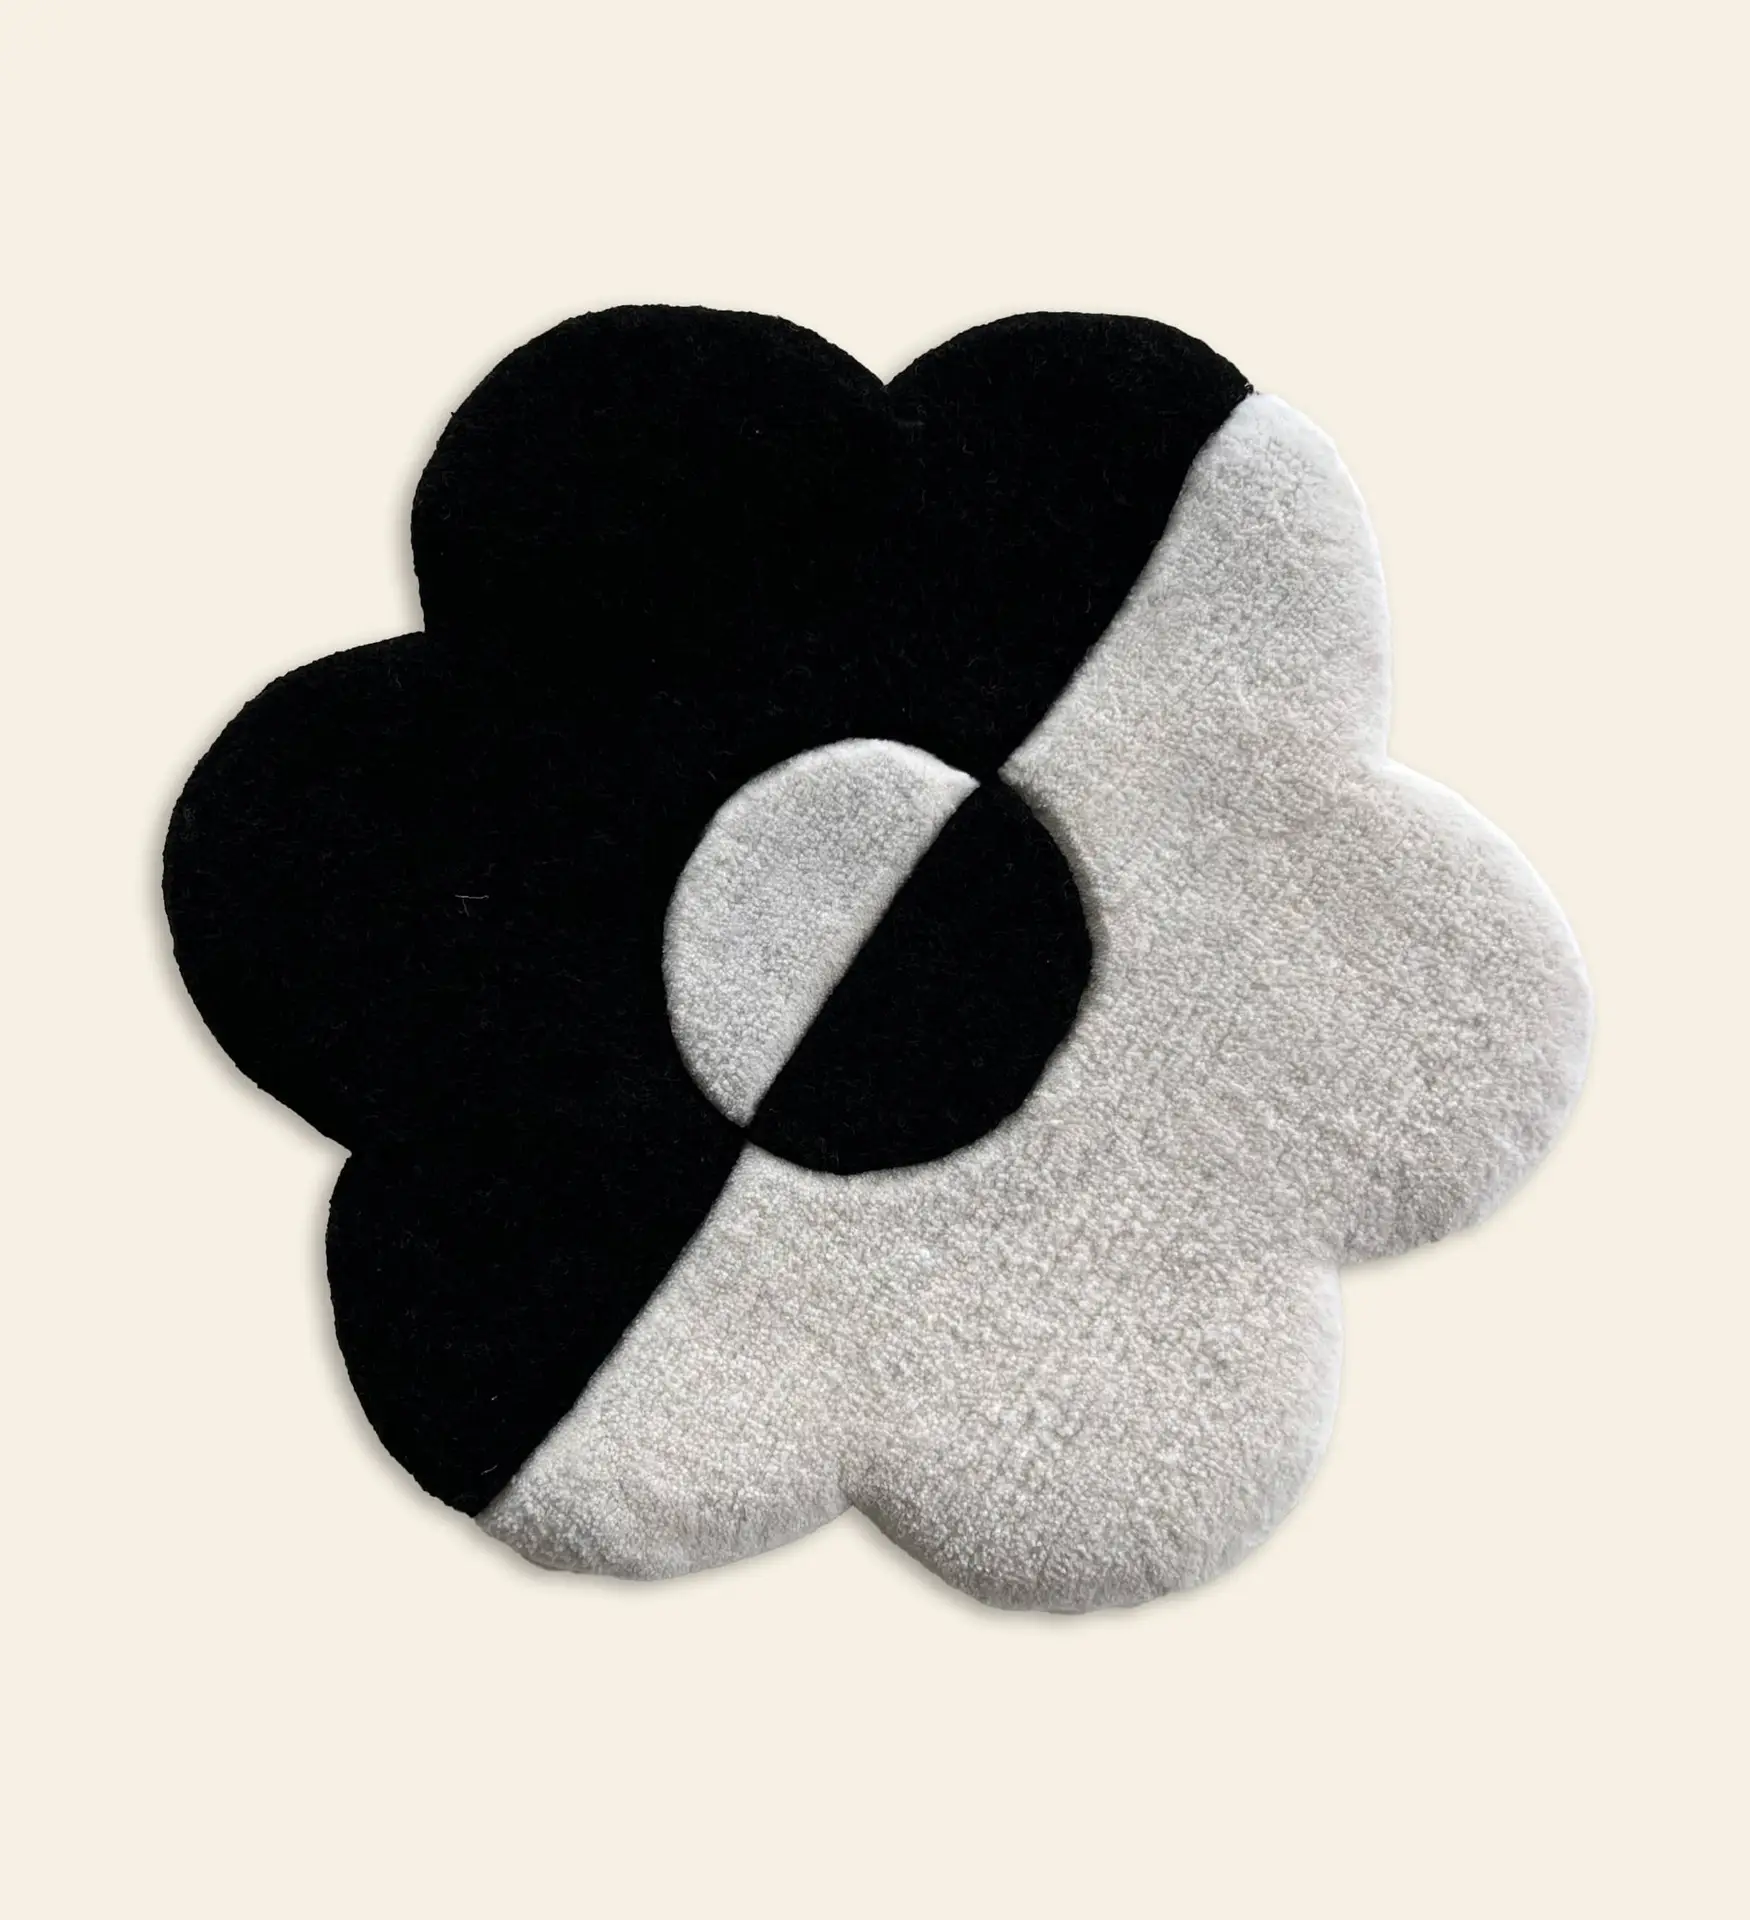 Habichl Tufted Flower Floor Rugs Panda 1